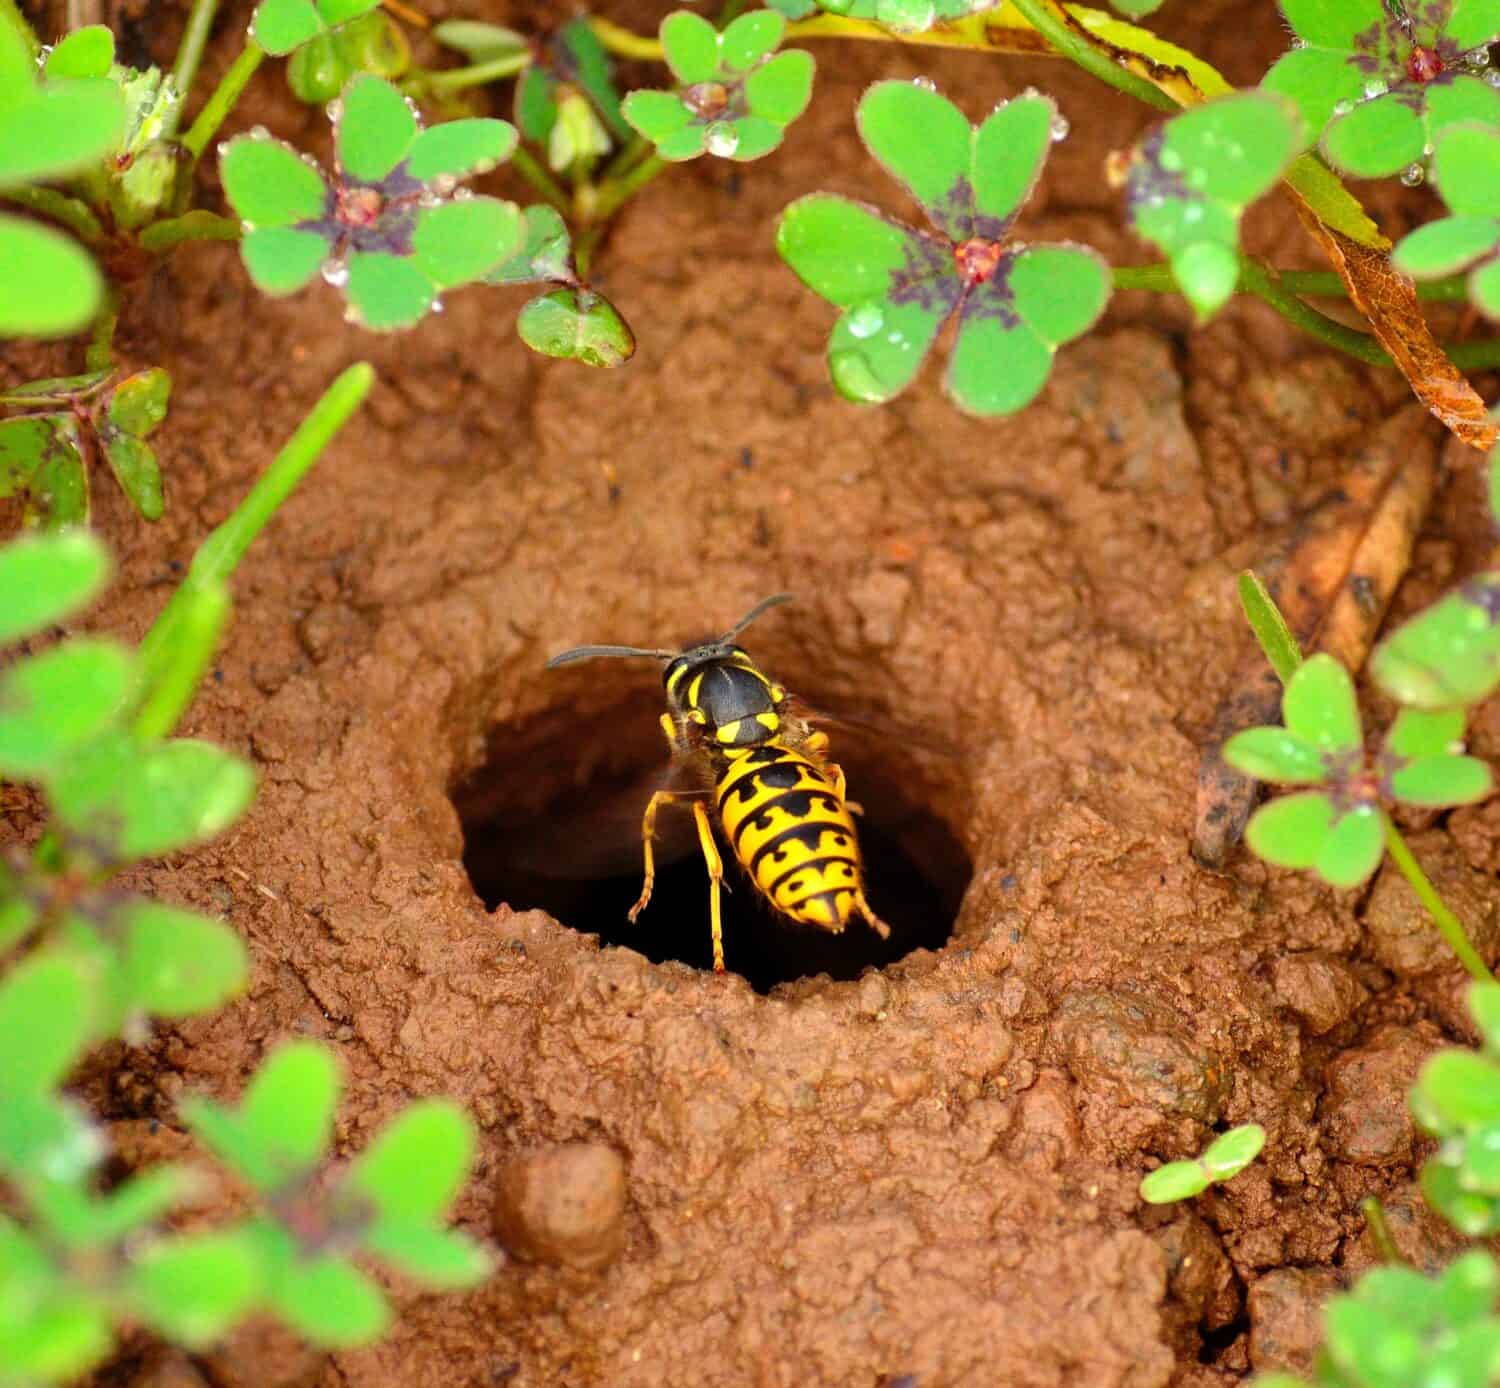 Wasp over the entrance hole of its underground nest